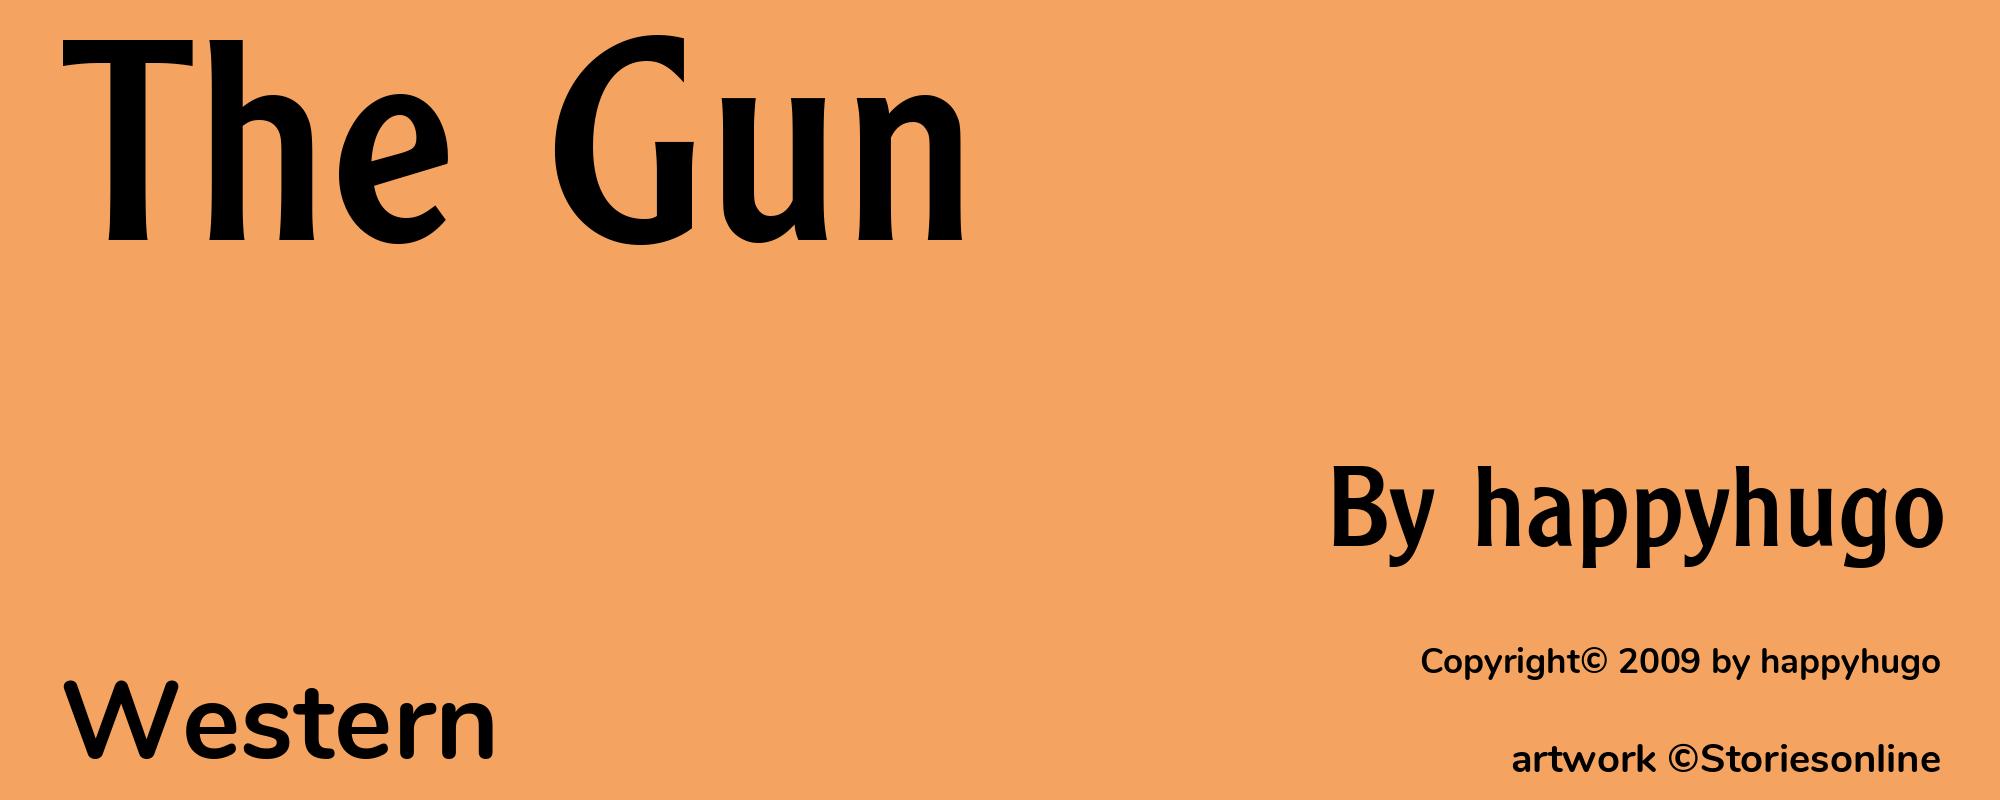 The Gun - Cover